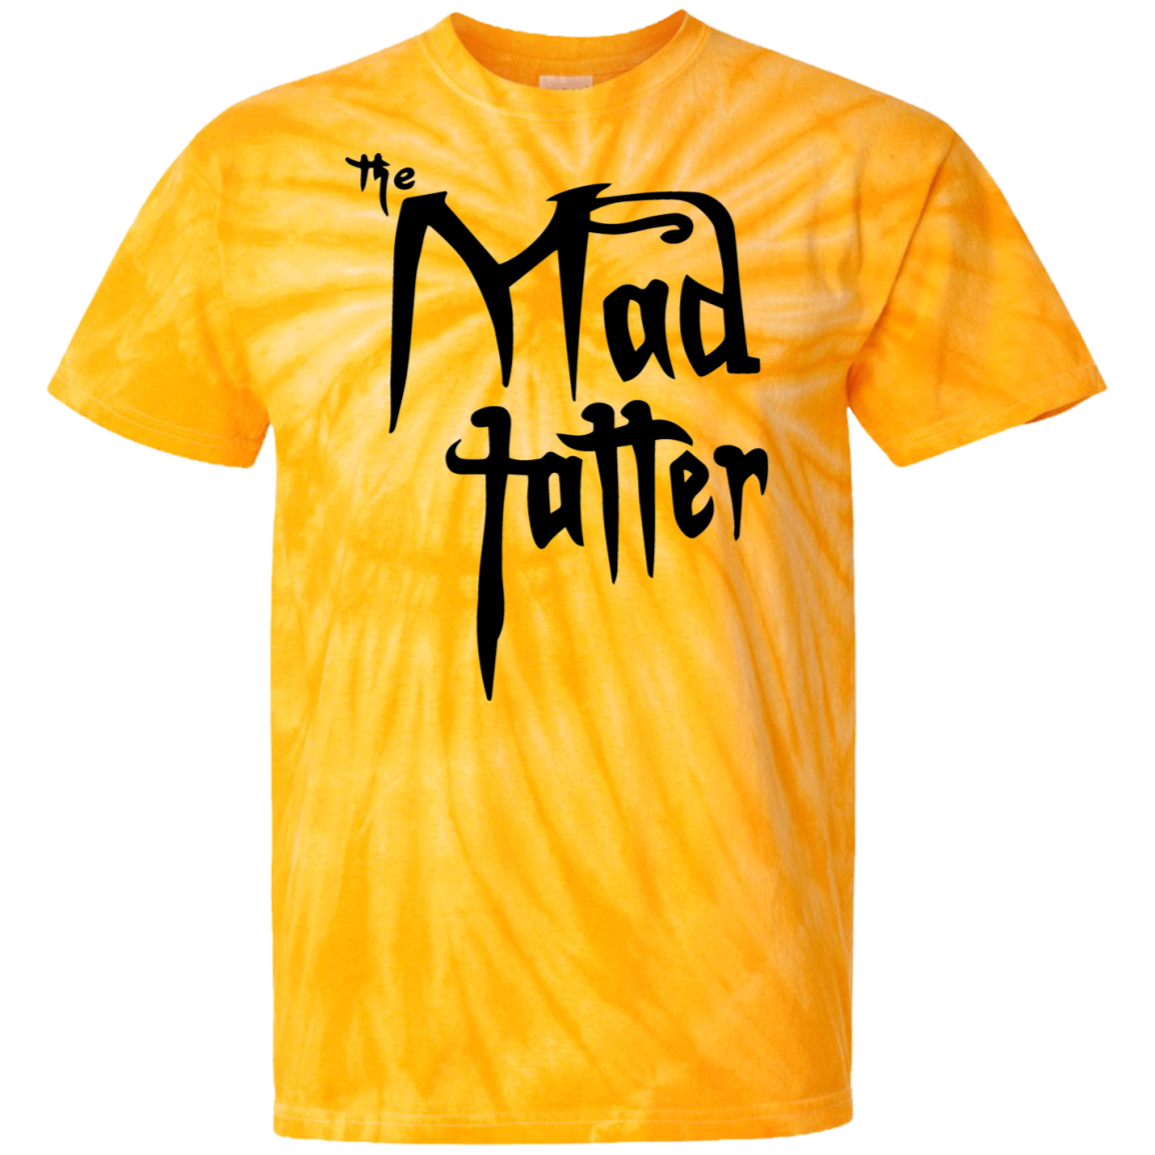 Mad Tatter Tie Dye T-Shirt